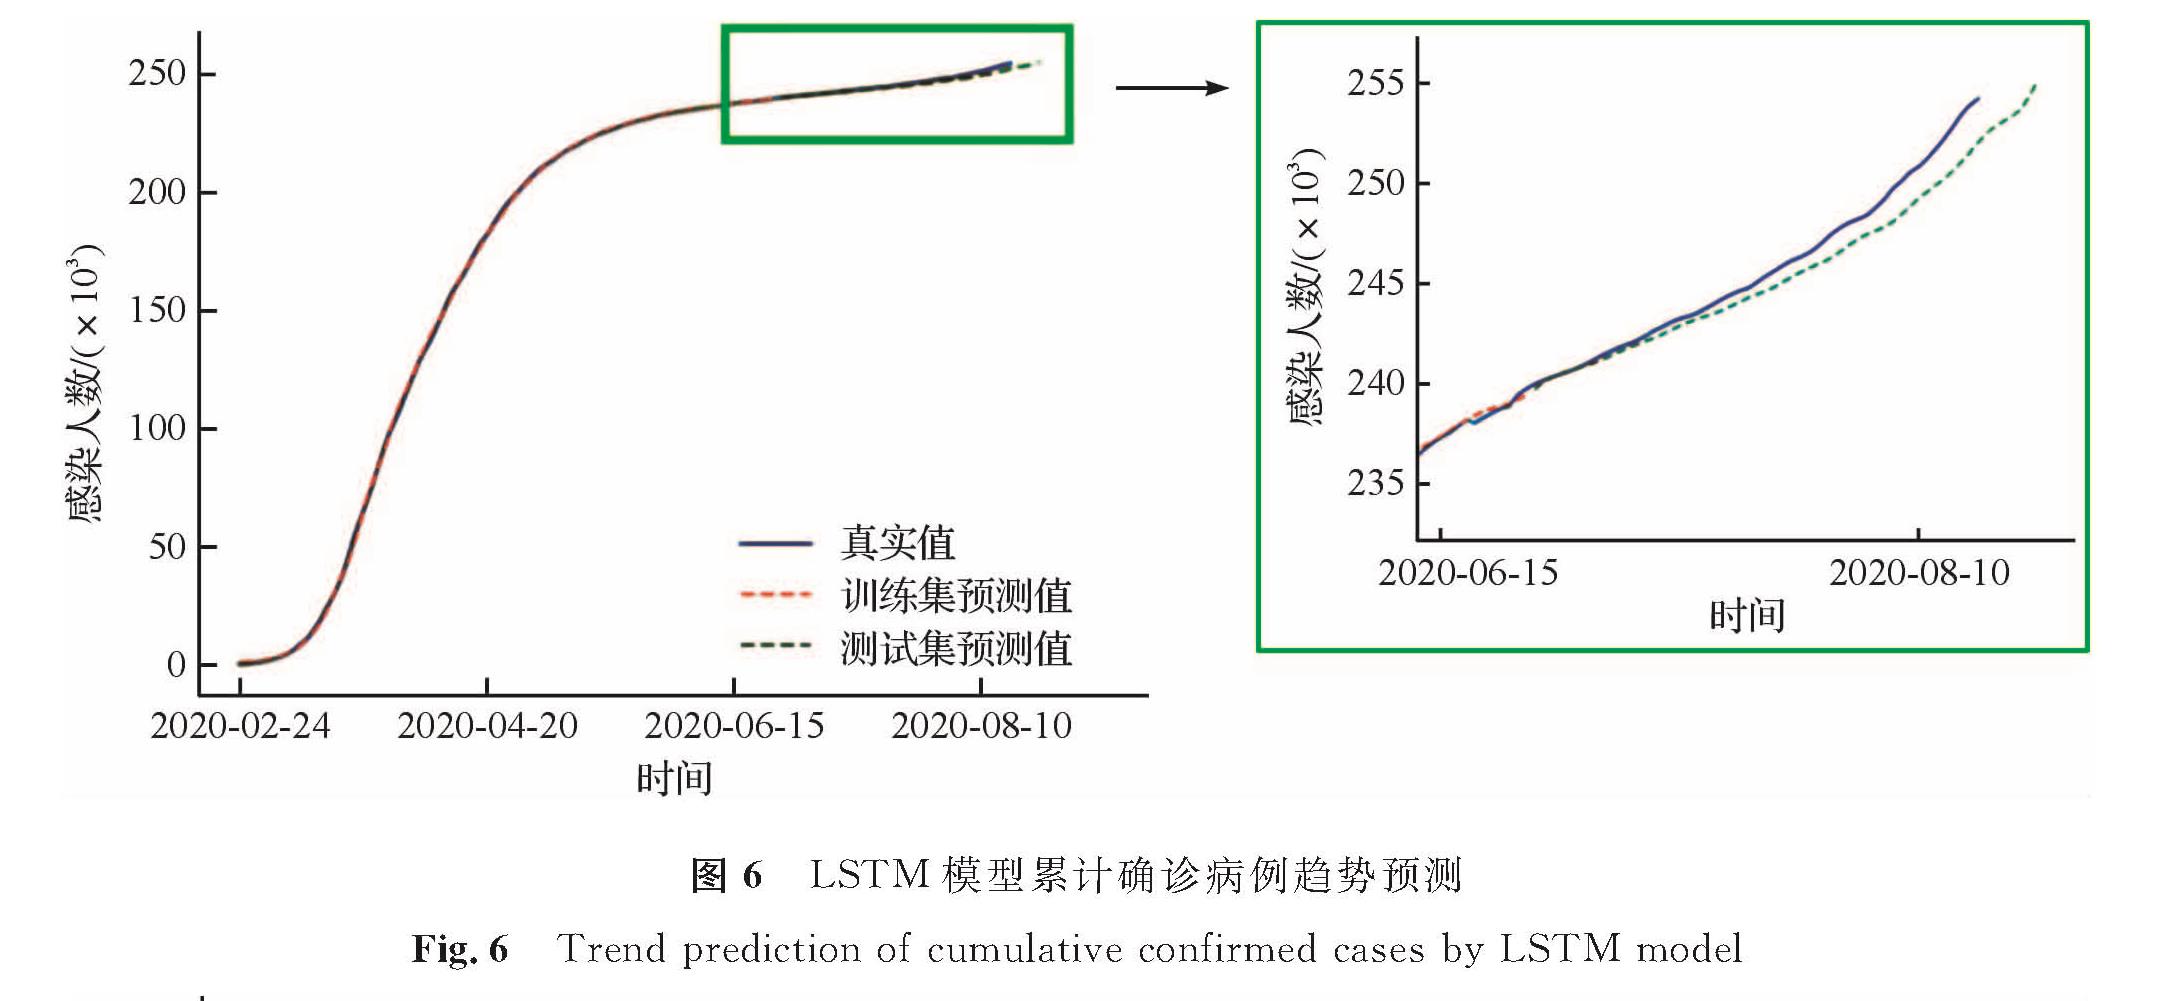 图6 LSTM模型累计确诊病例趋势预测<br/>Fig.6 Trend prediction of cumulative confirmed cases by LSTM model